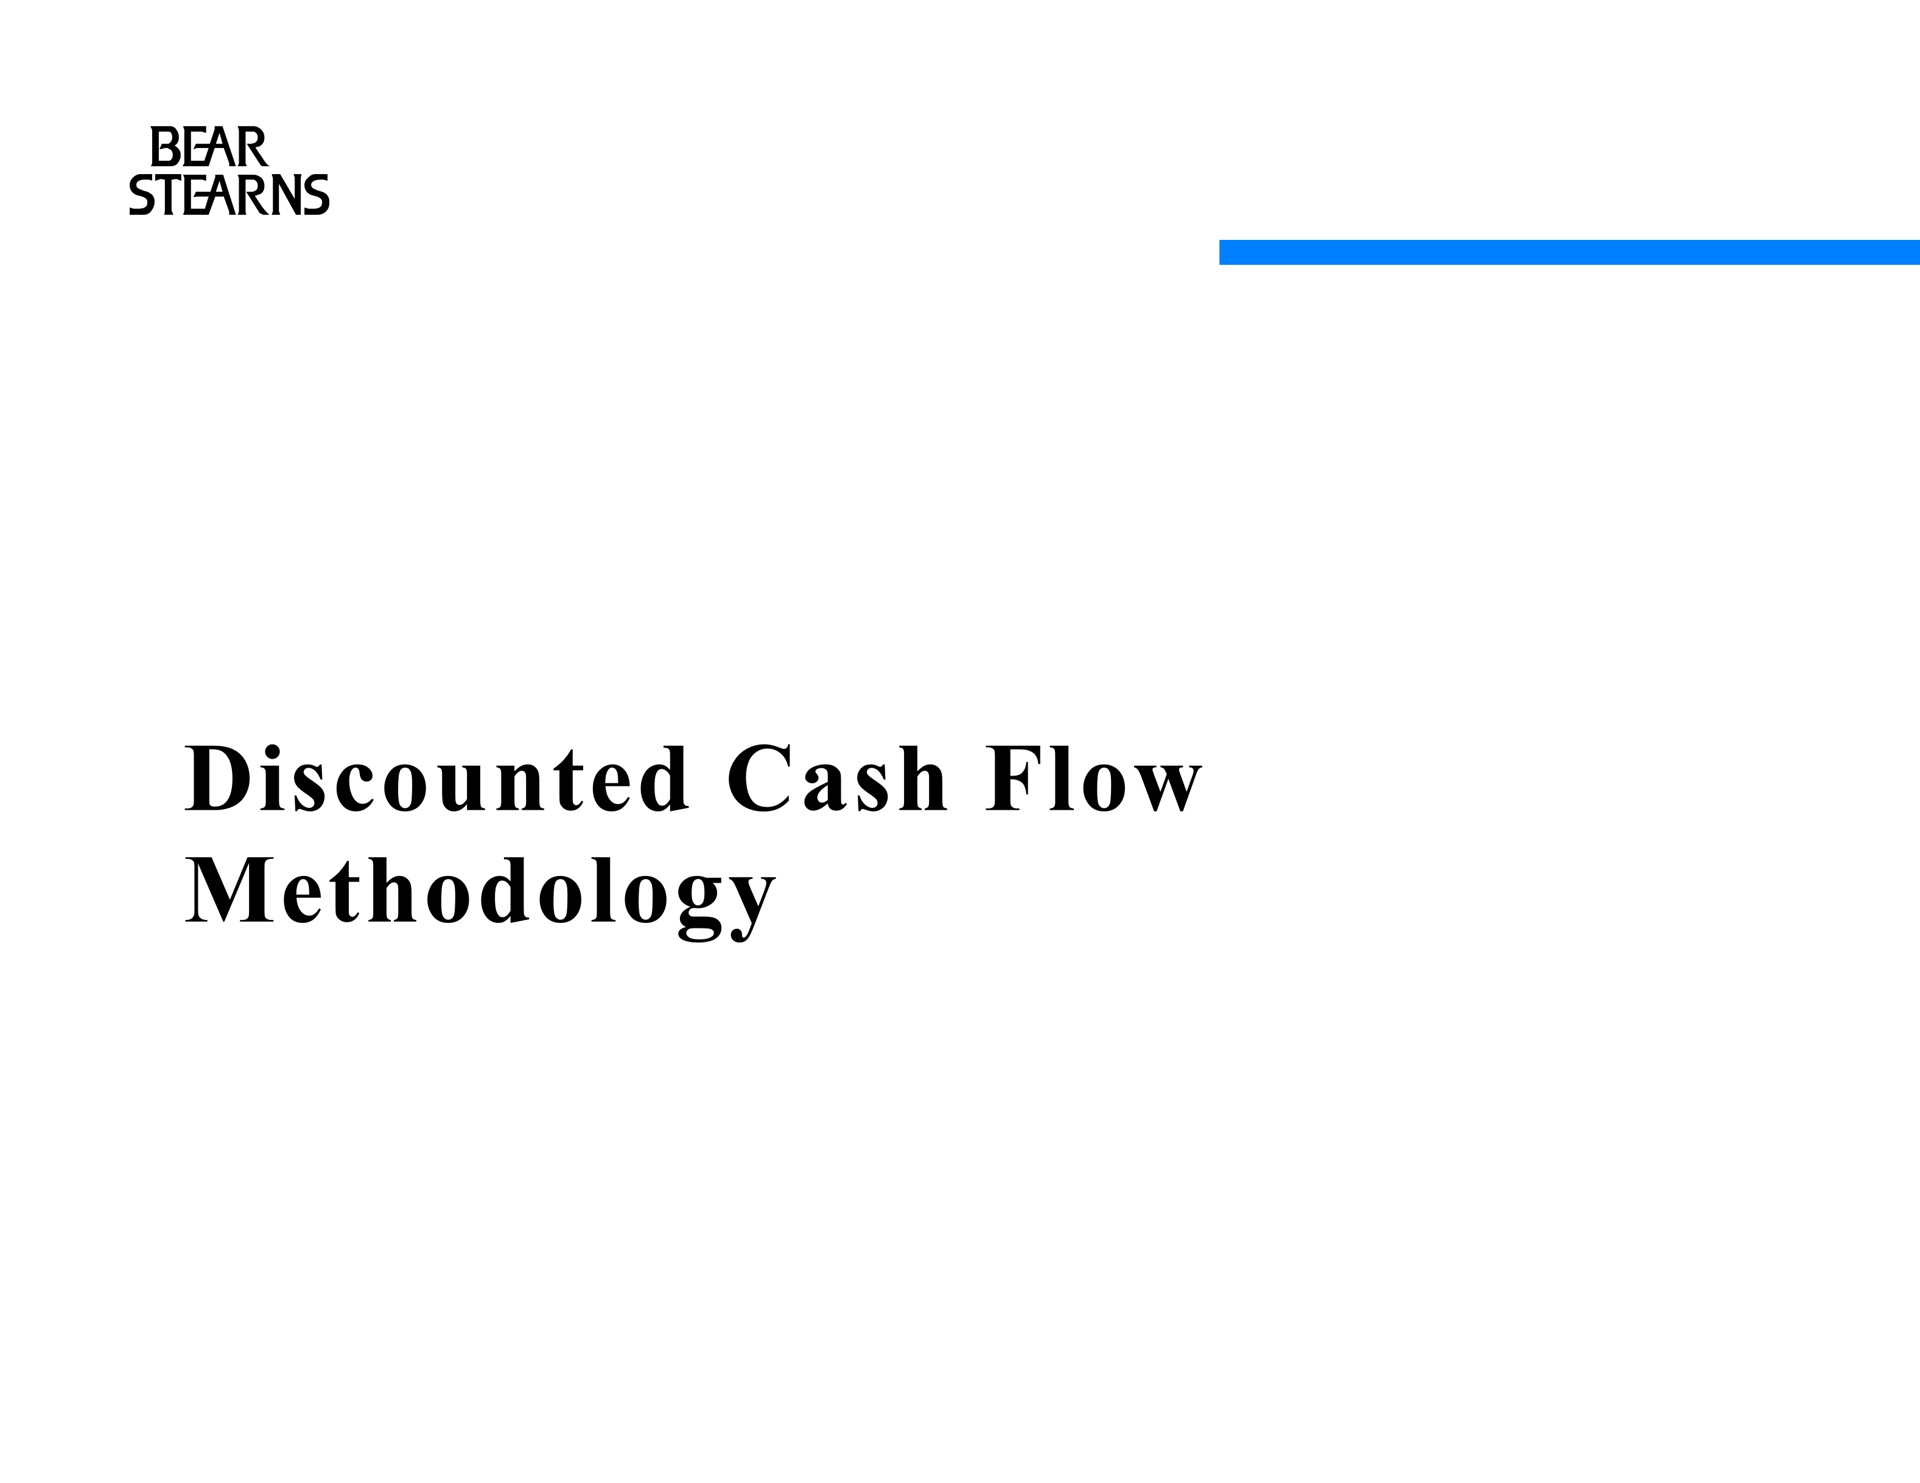 discounted cash flow methodology | Bear Stearns